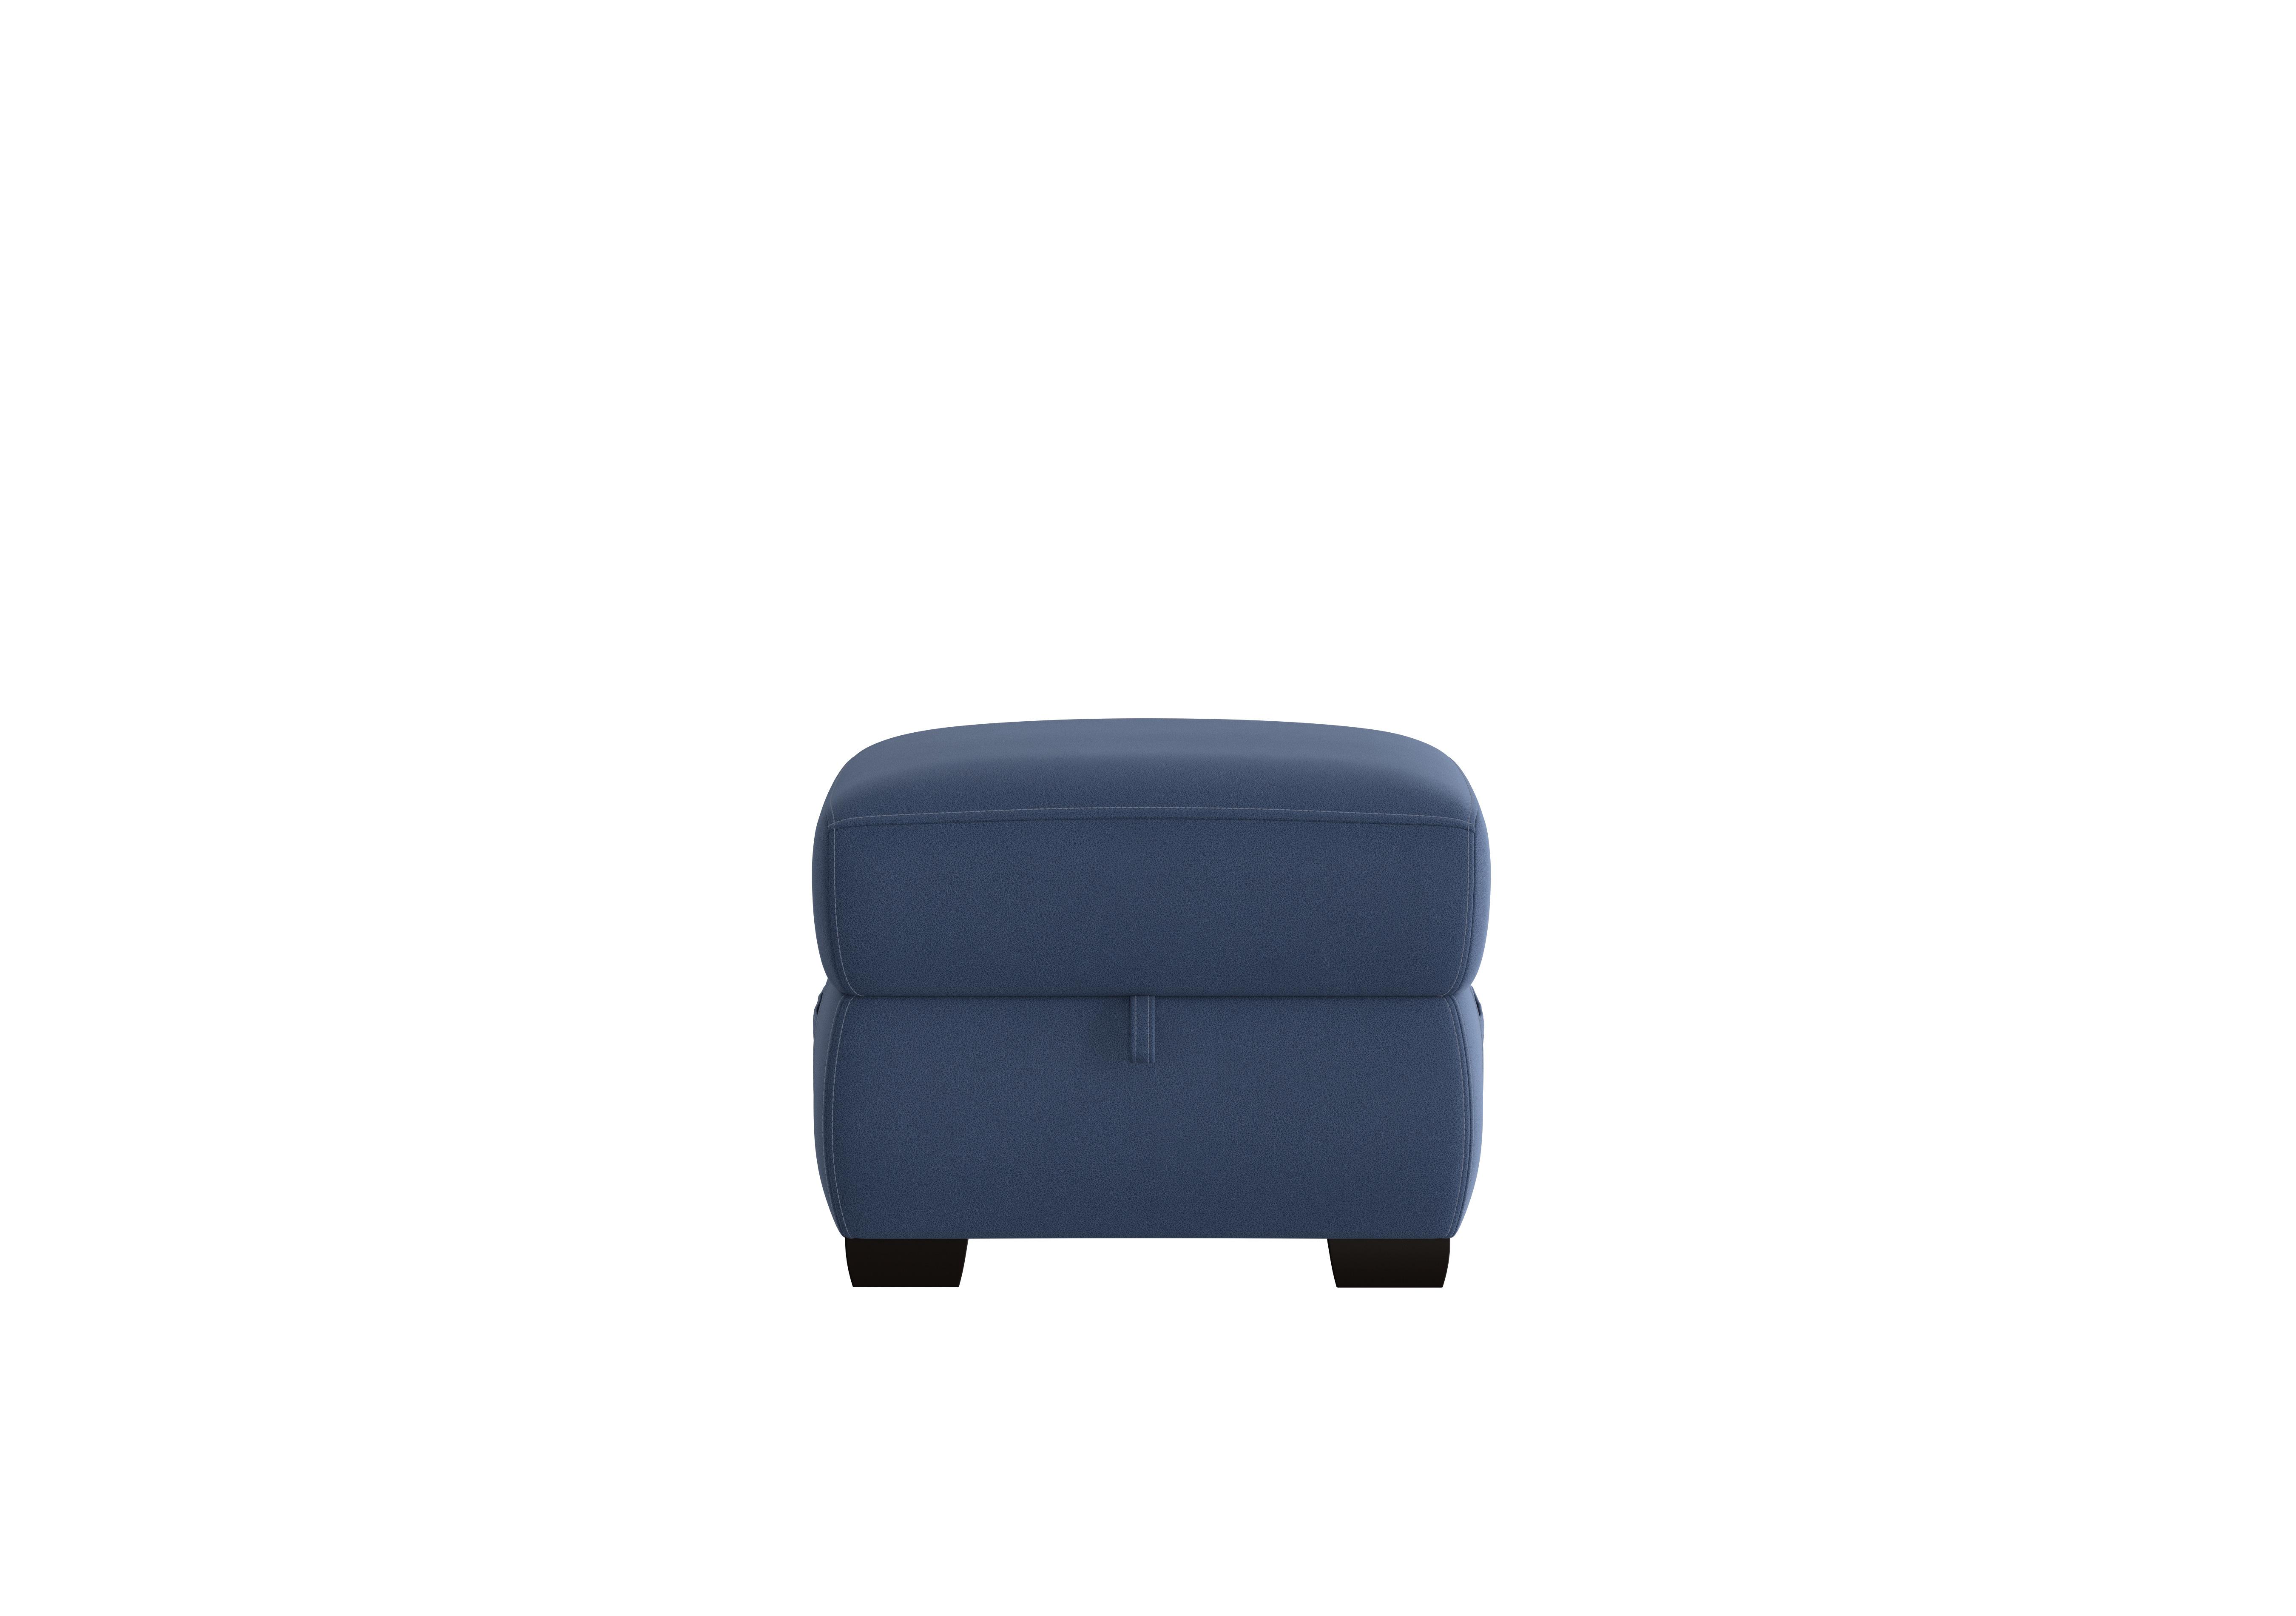 Starlight Express Fabric Storage Footstool in Bfa-Blj-R10 Blue on Furniture Village